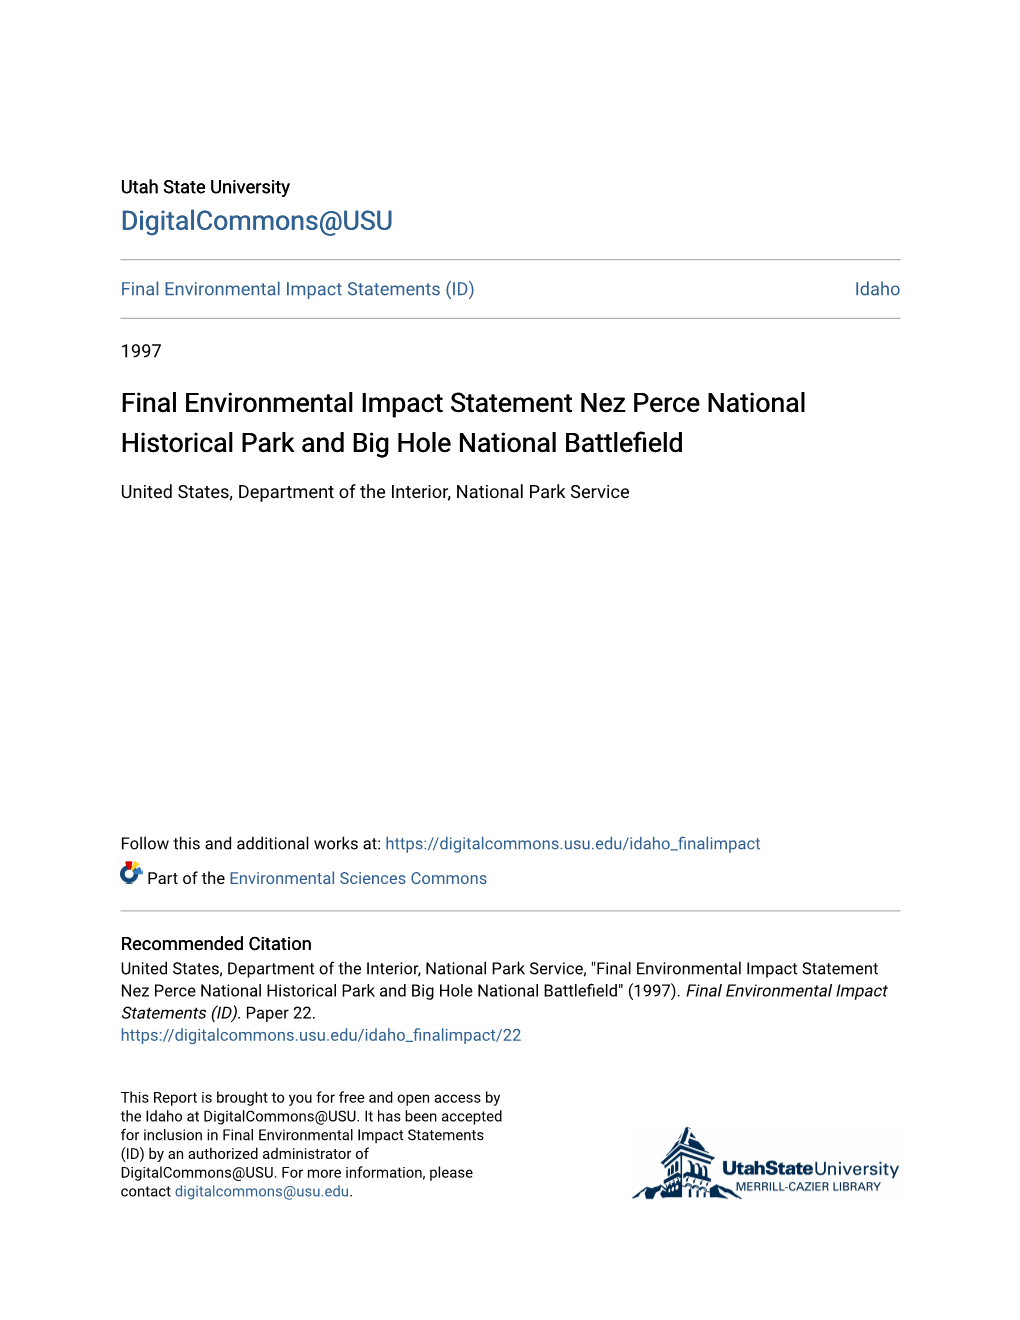 Final Environmental Impact Statement Nez Perce National Historical Park and Big Hole National Battlefield